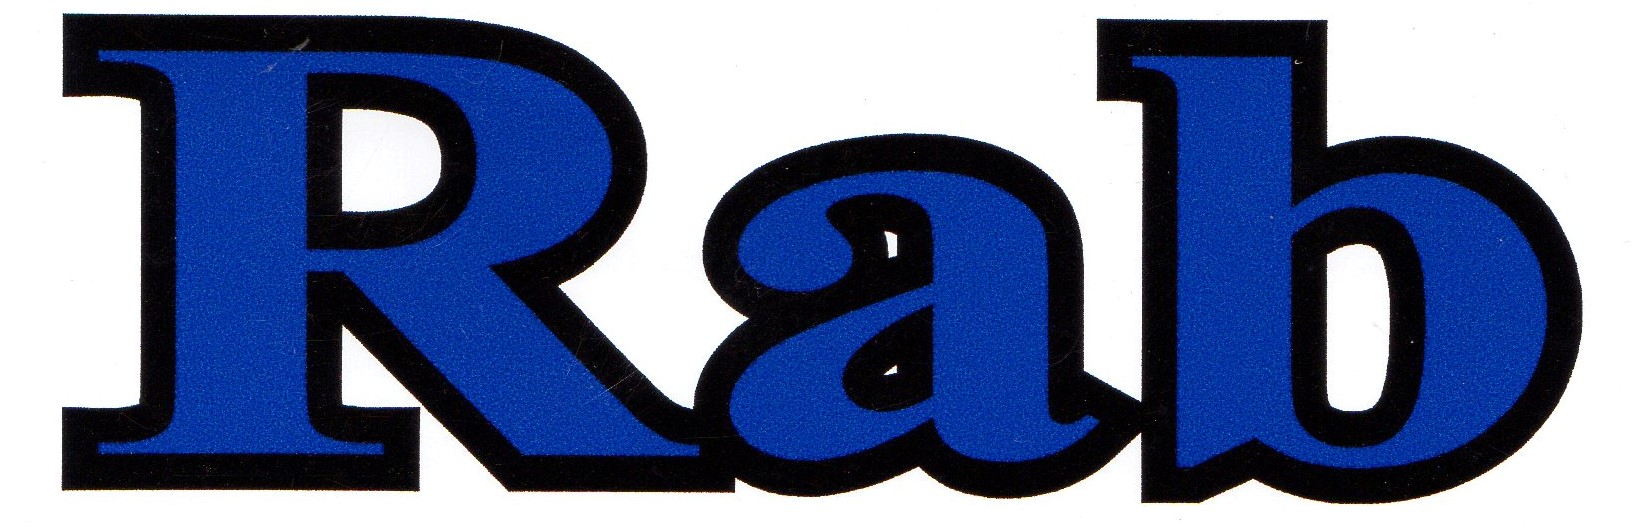 U11-Rab-logo-Update-1.jpg